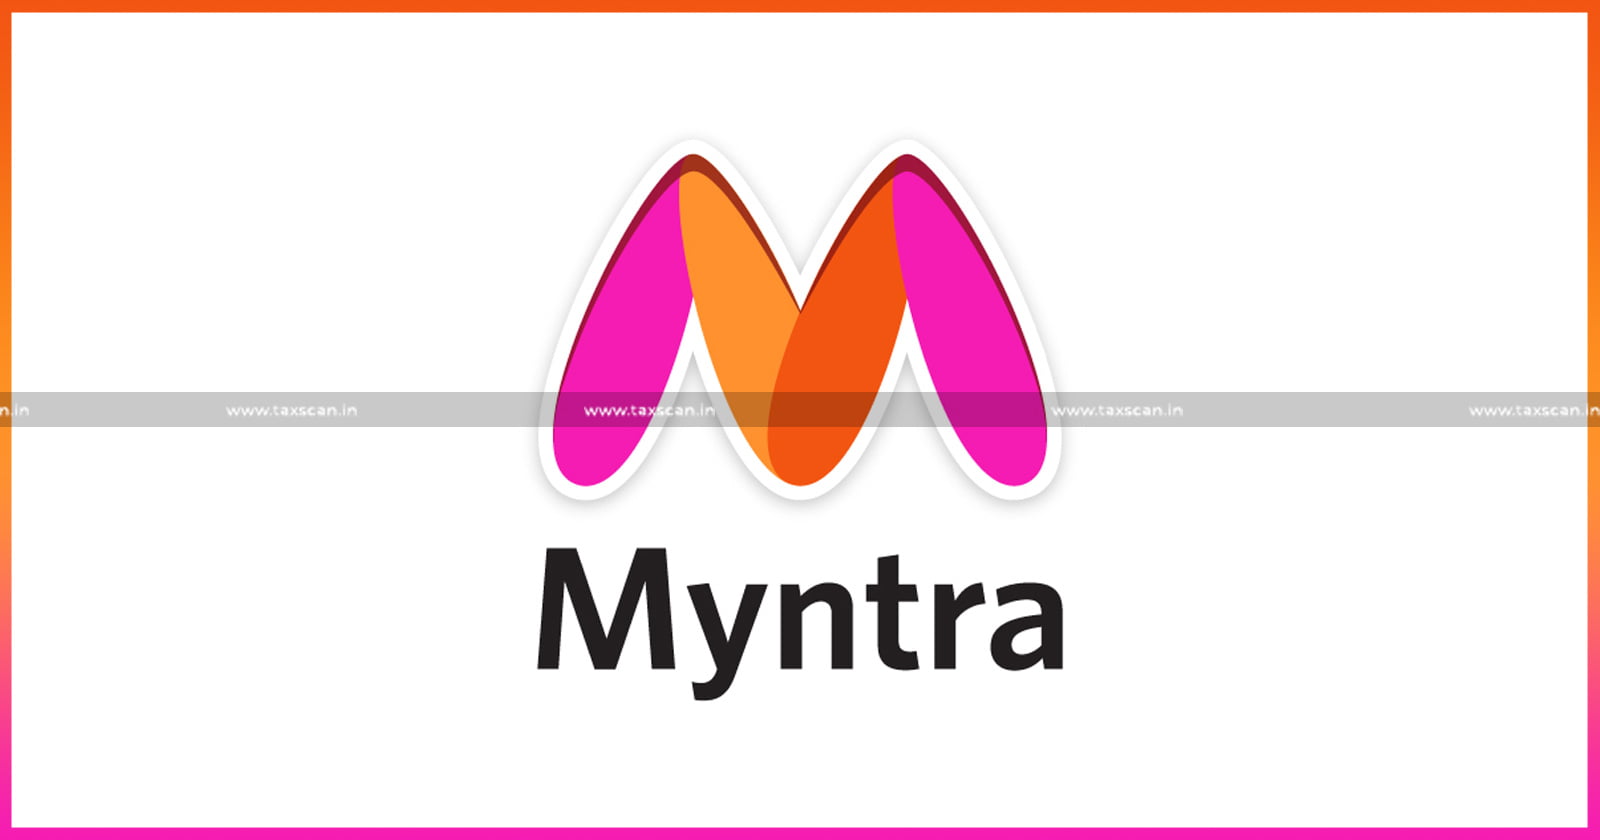 CA Vacancy in Myntra - CA Vacancy - Vacancy in Myntra - CA - Myntra - Jobscan